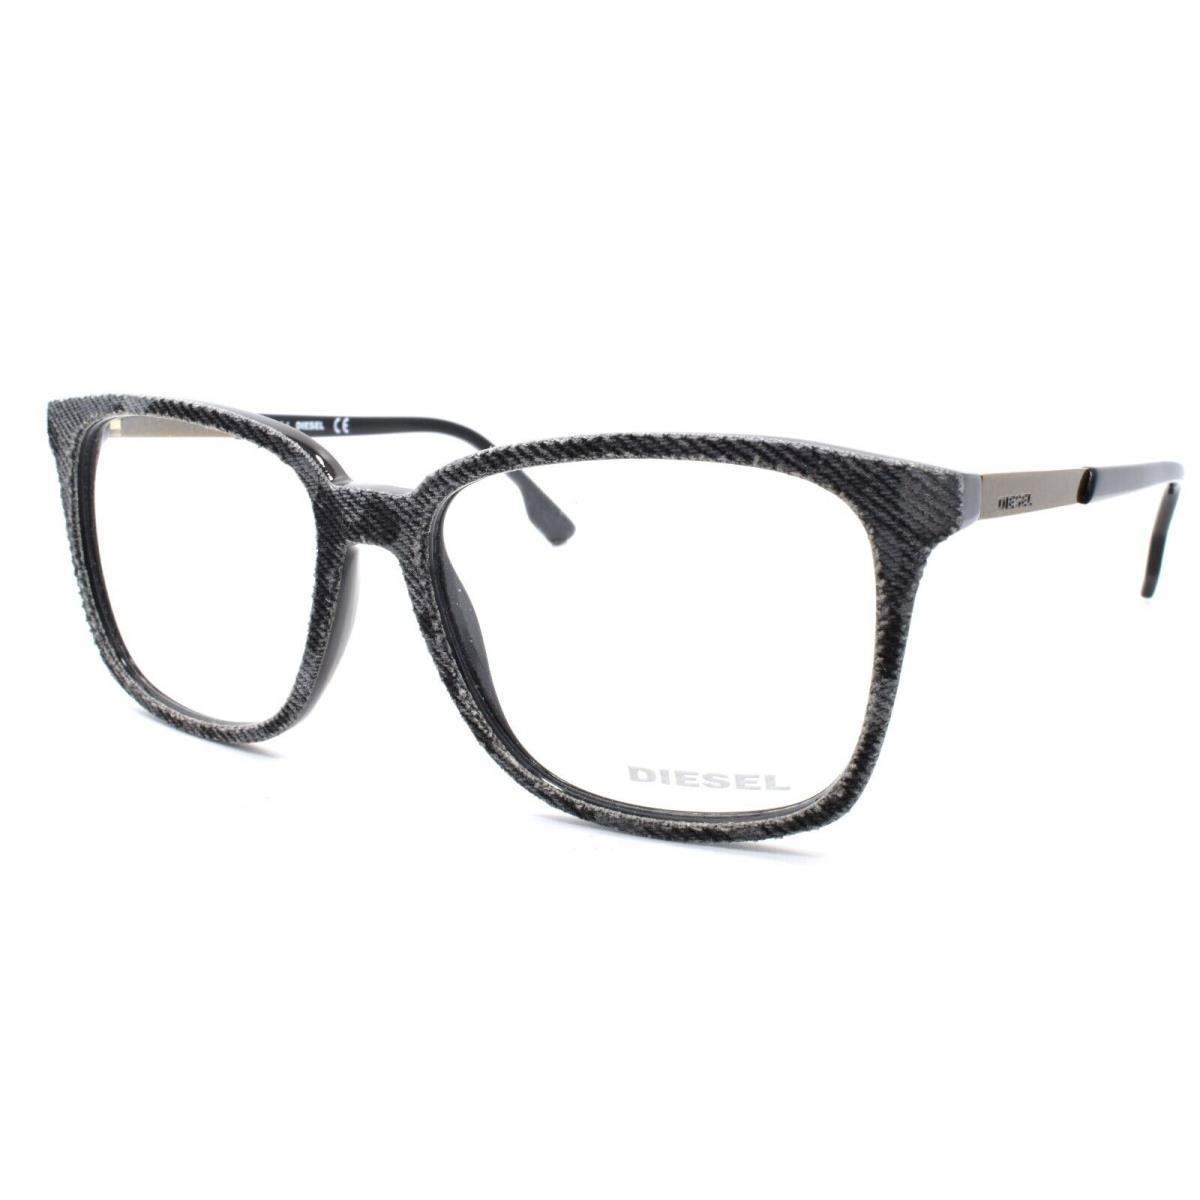 Diesel DL5116 005 Unisex Eyeglasses Frames 53-16-145 Grey Pattern Denim / Black